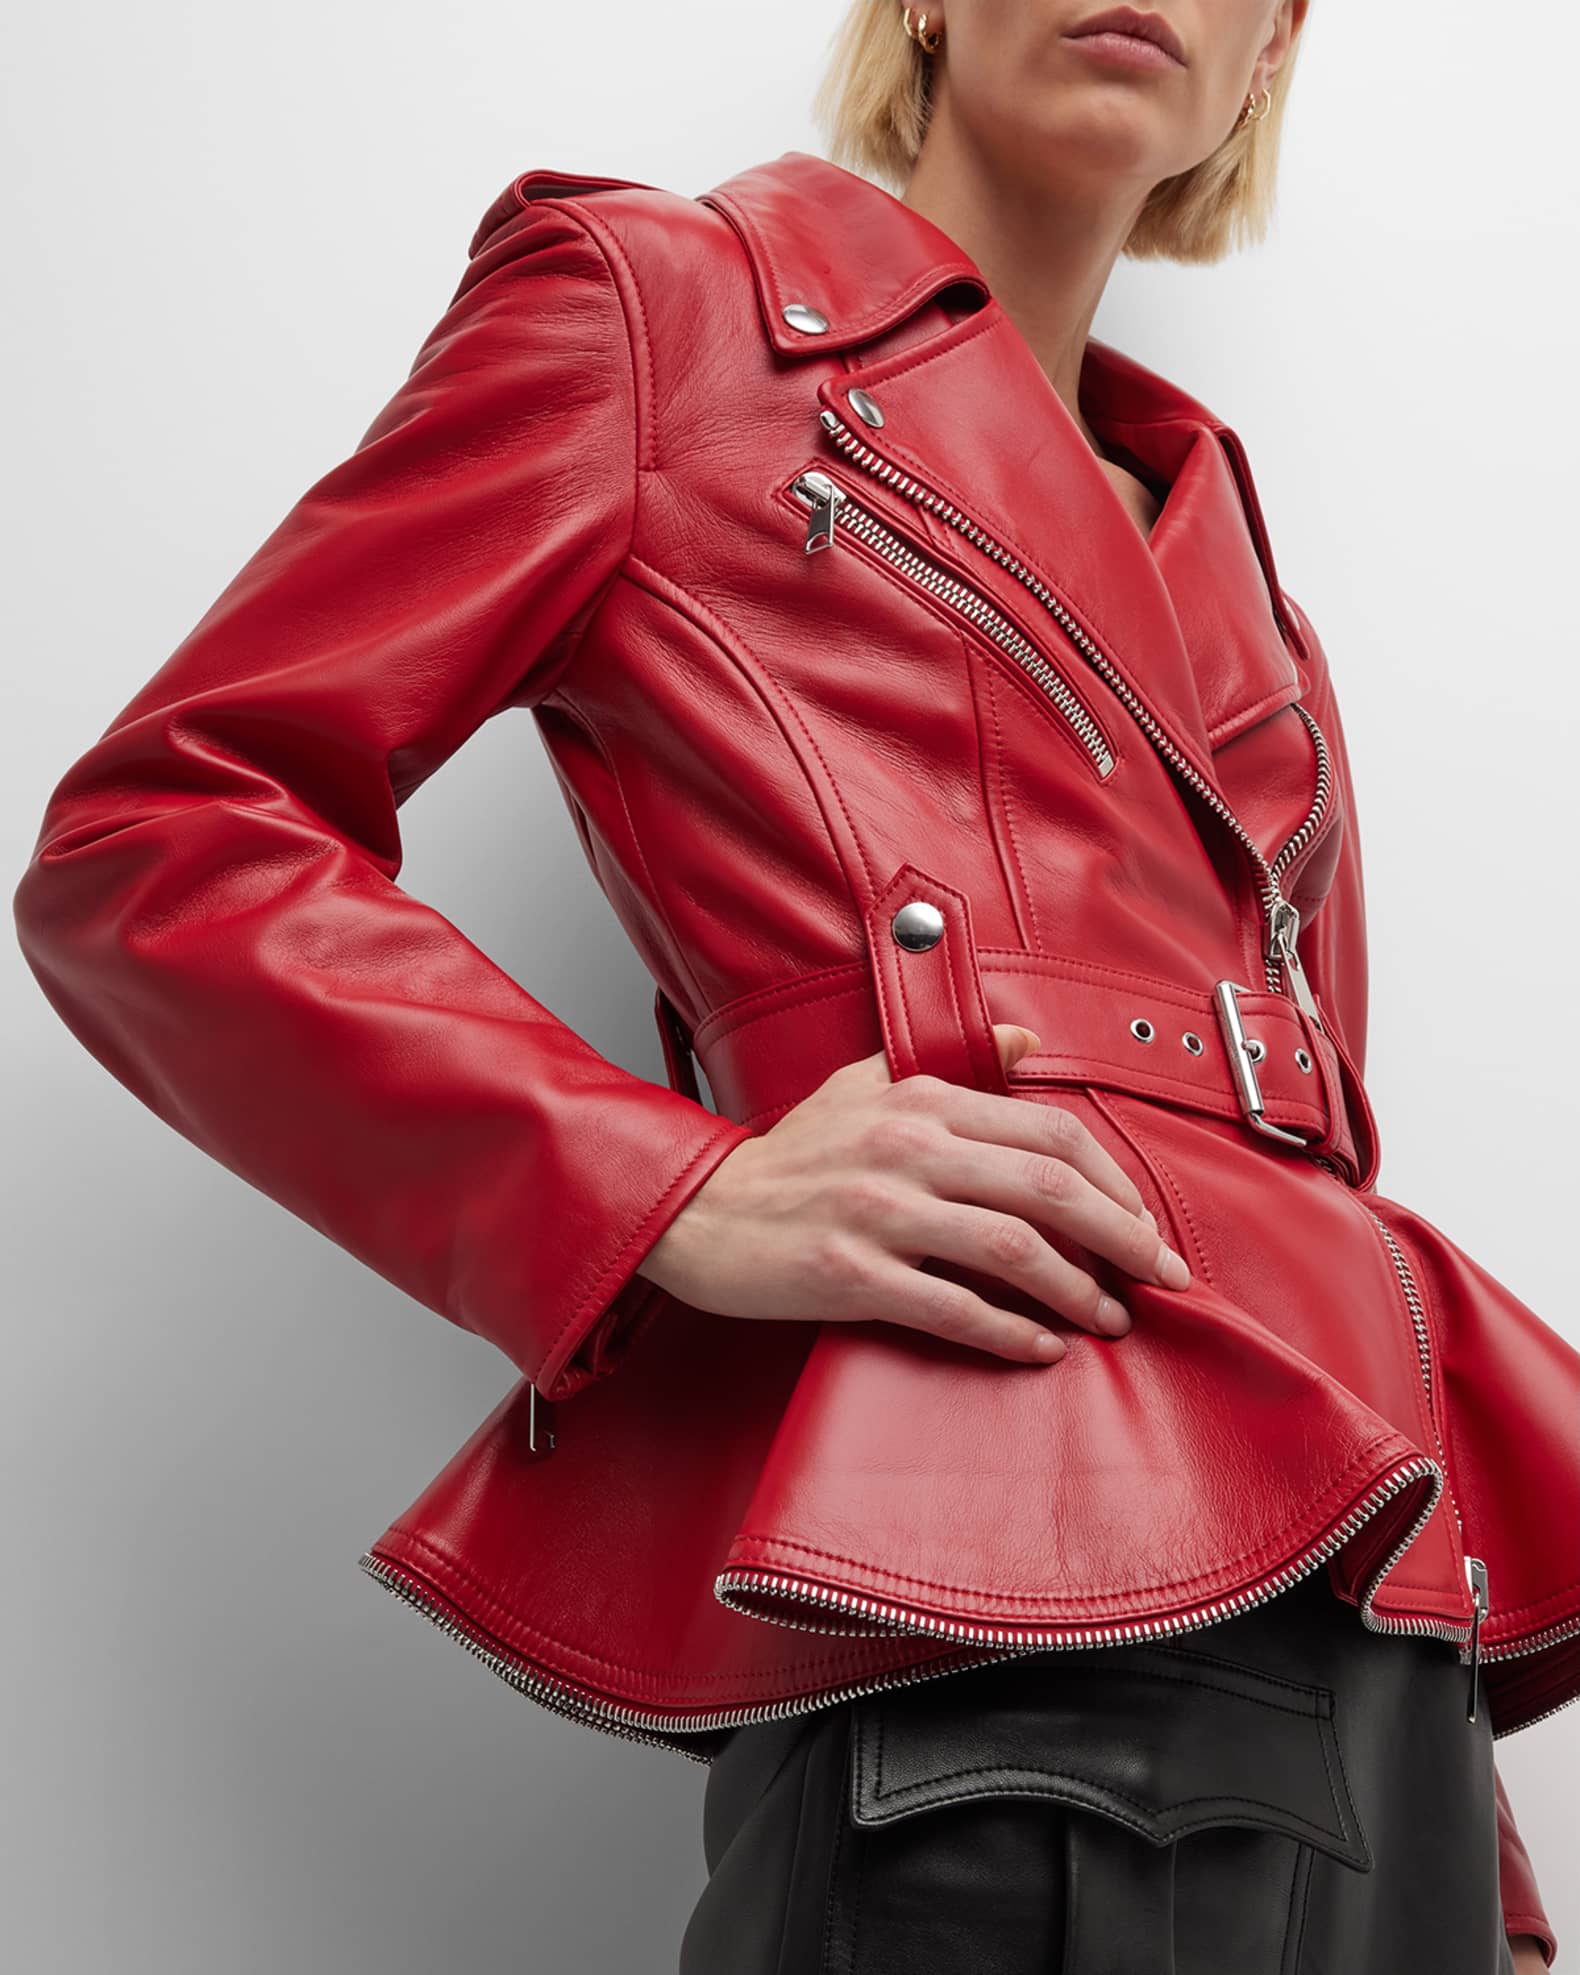 Alexander McQueen Women's Core Peplum Leather Moto Jacket - Black - Size 4